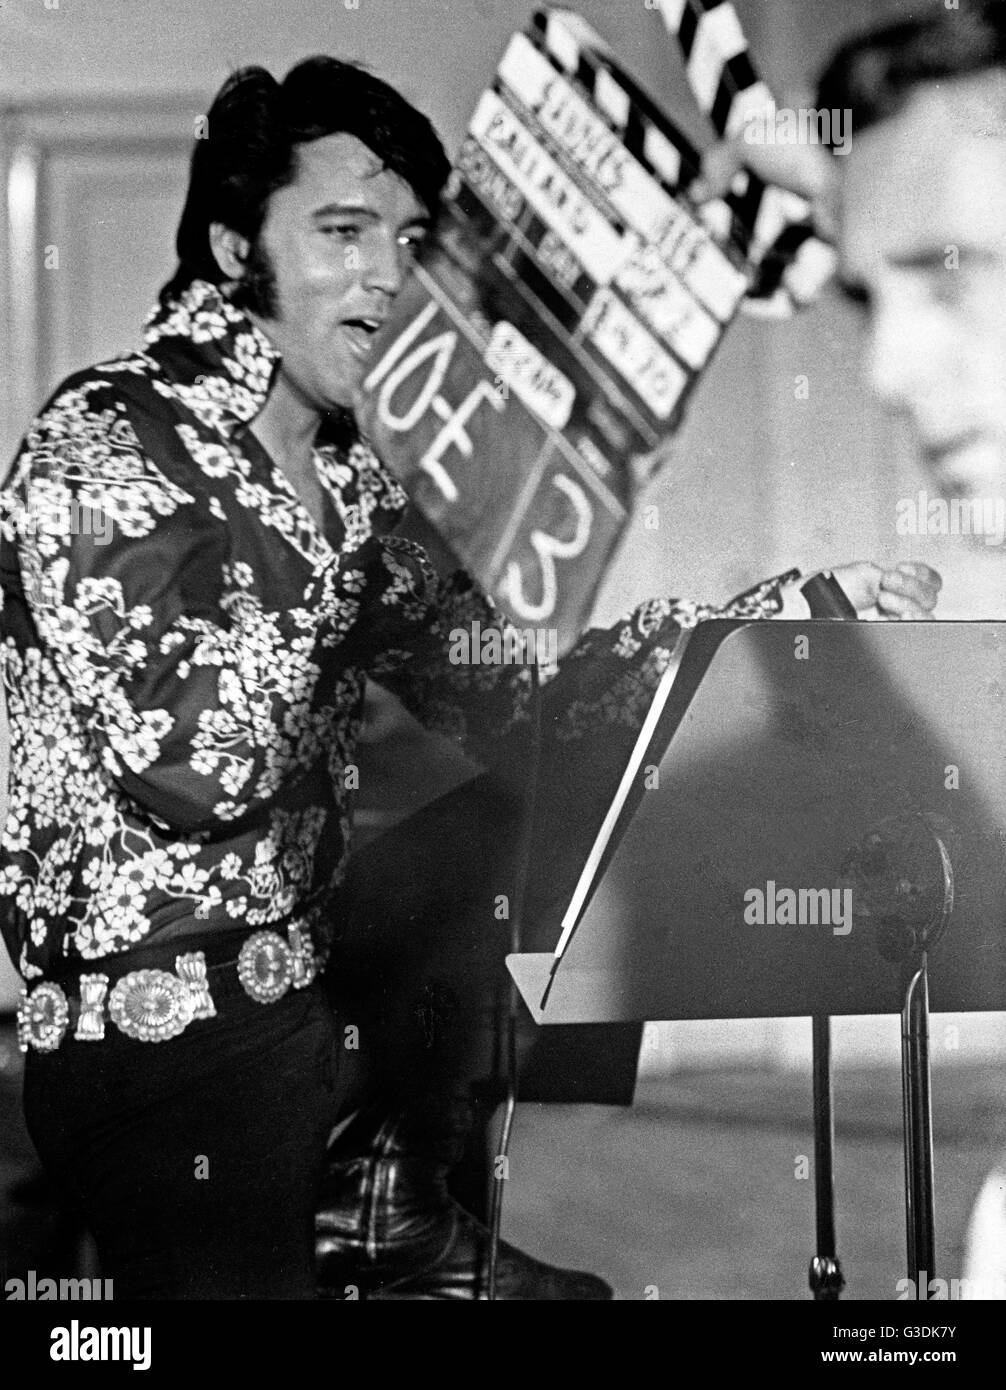 Elivs: That's The Way It Is, Dokumentation, USA 1970, Regie: Denis Sanders, Abbildung: The King Elvis Presley Stock Photo